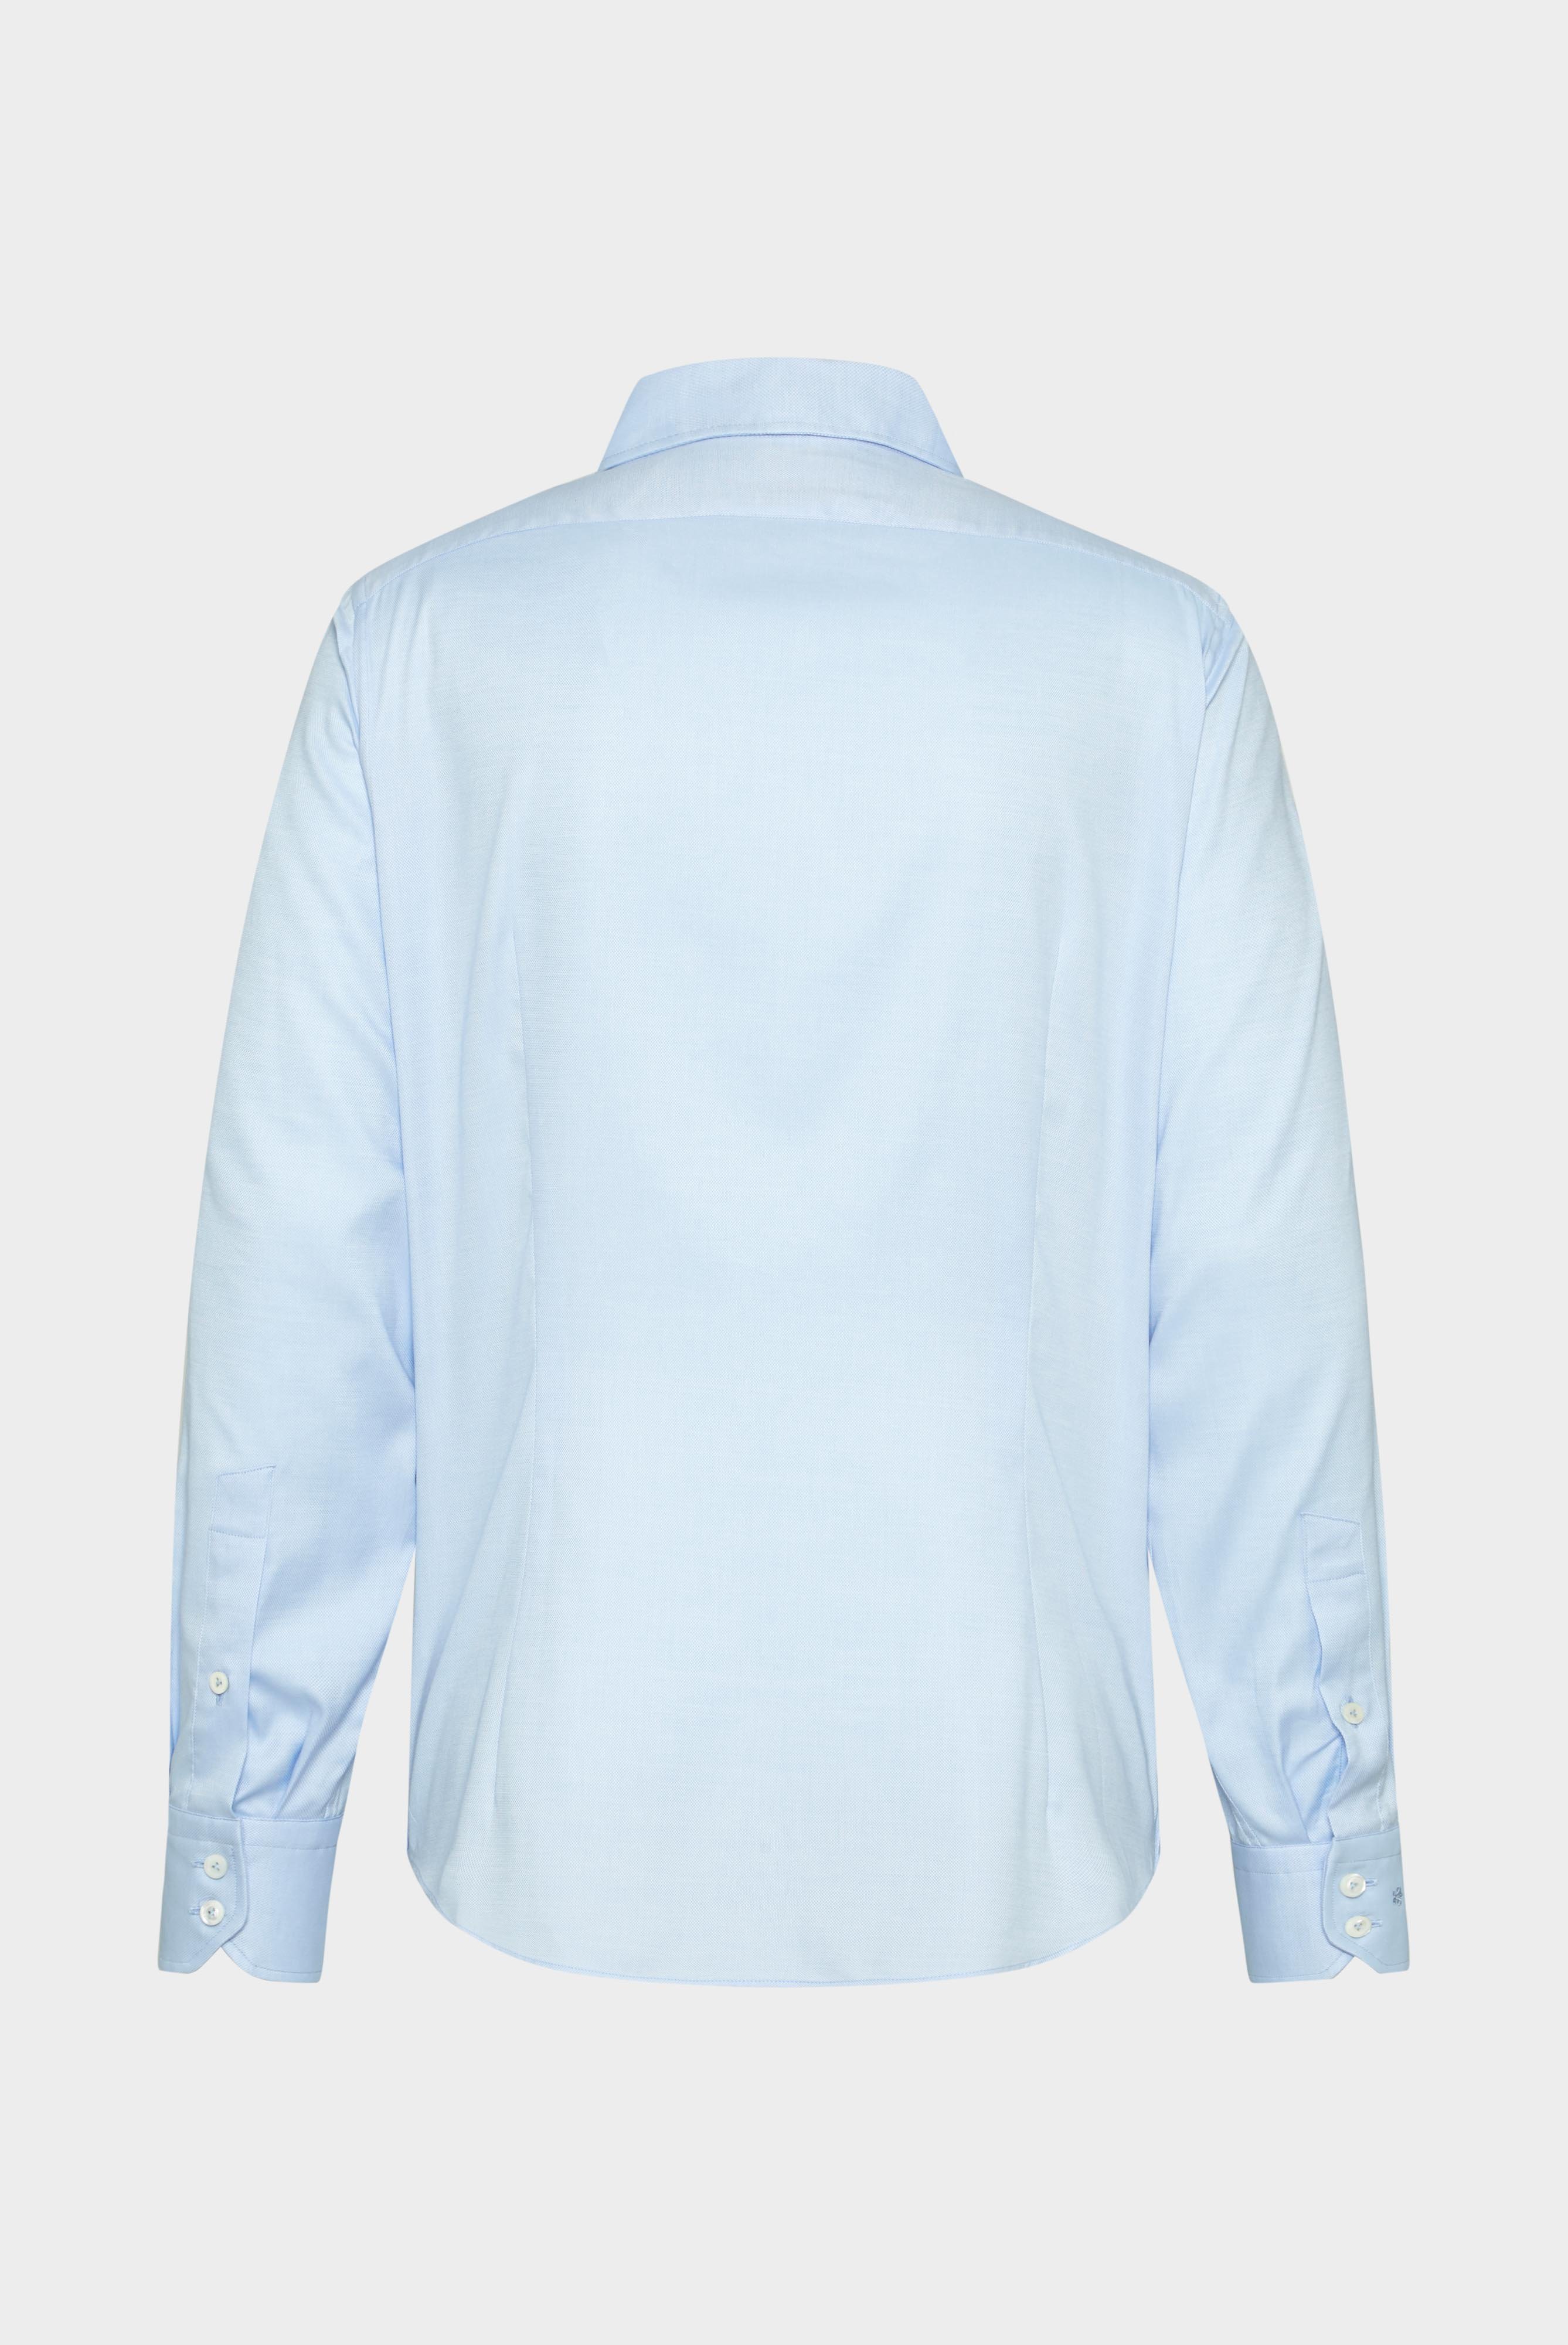 Casual Shirts+Structured Plain Shirt+20.2013.AV.130872.720.37